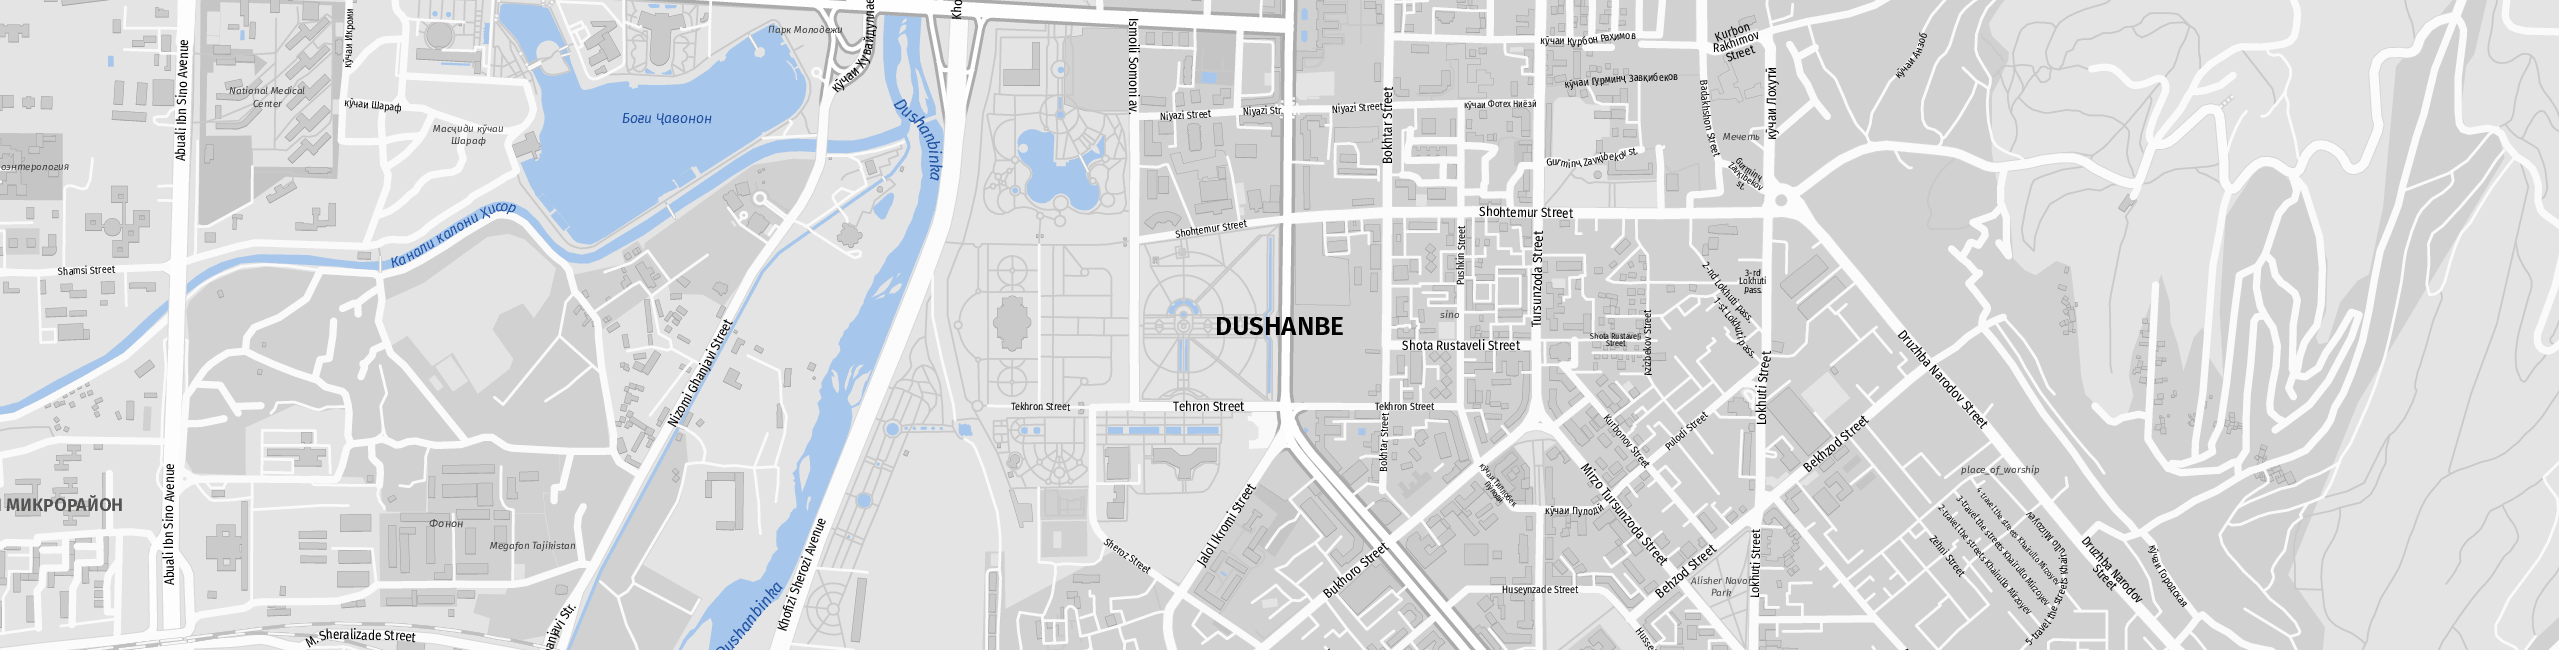 Stadtplan Dushanbe zum Downloaden.